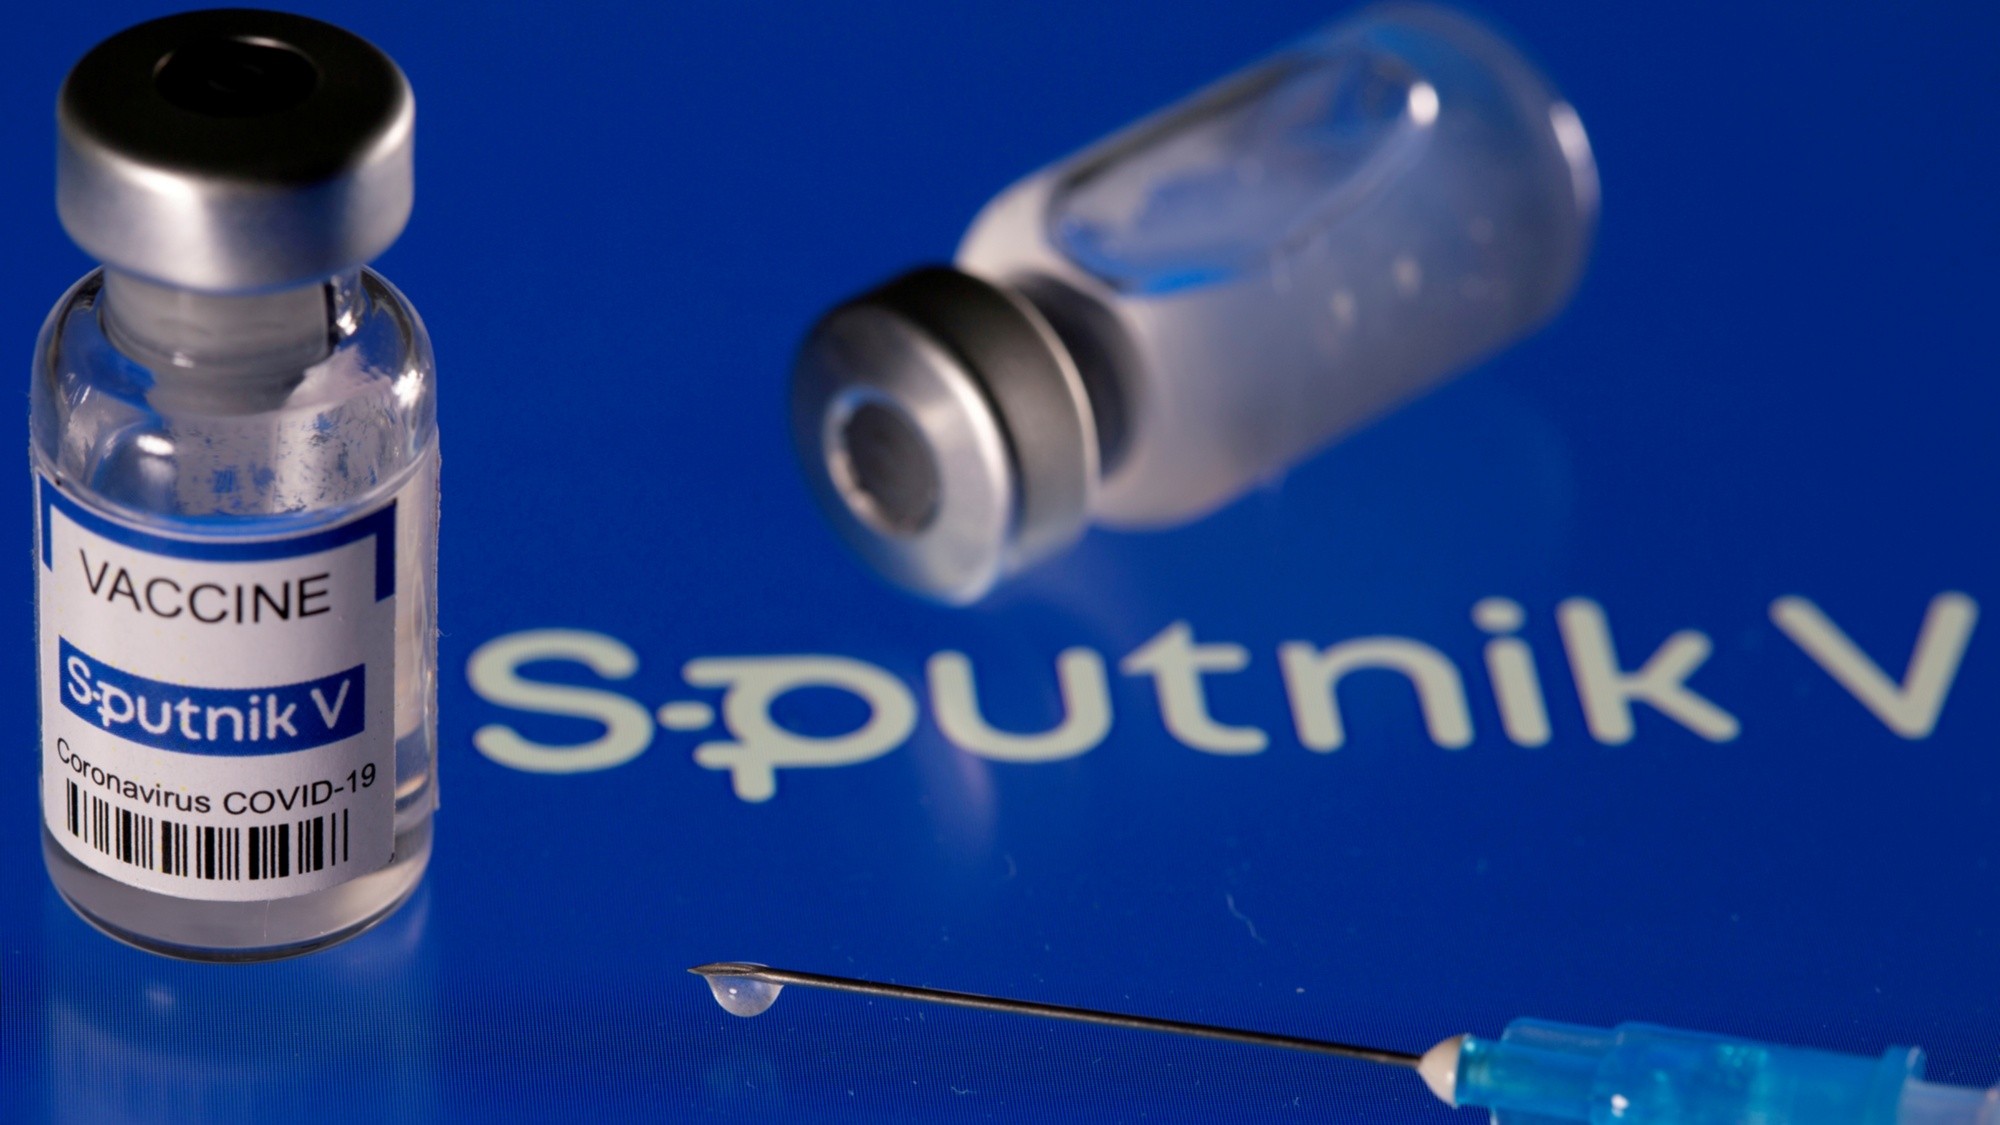 vacuna sputnik v pudiera adaptarse contra la variante omicron laverdaddemonagas.com sputnik